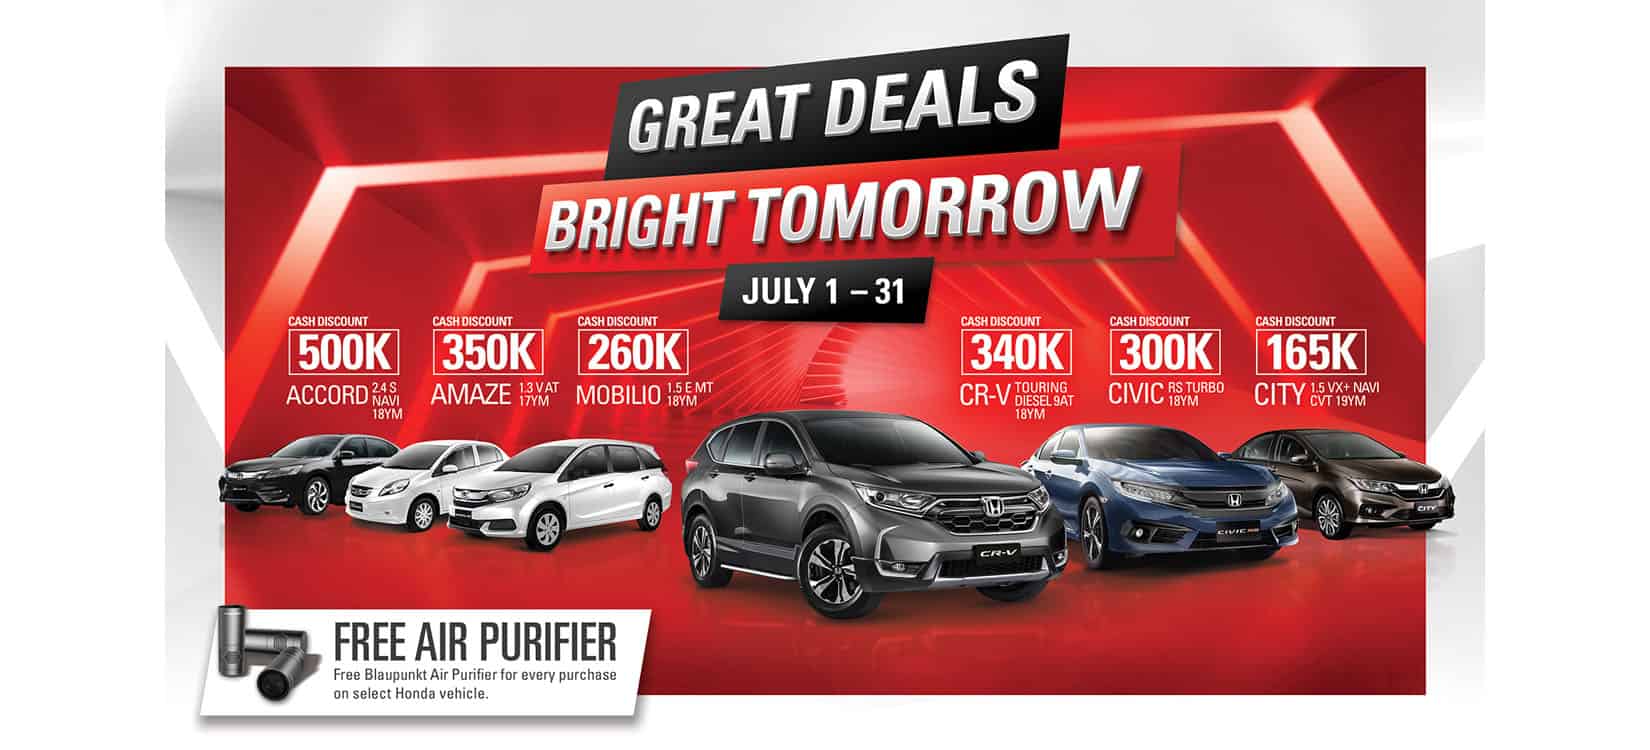 Honda Cars Philippines Huge Cash Discounts Great Deals Await At Honda This July